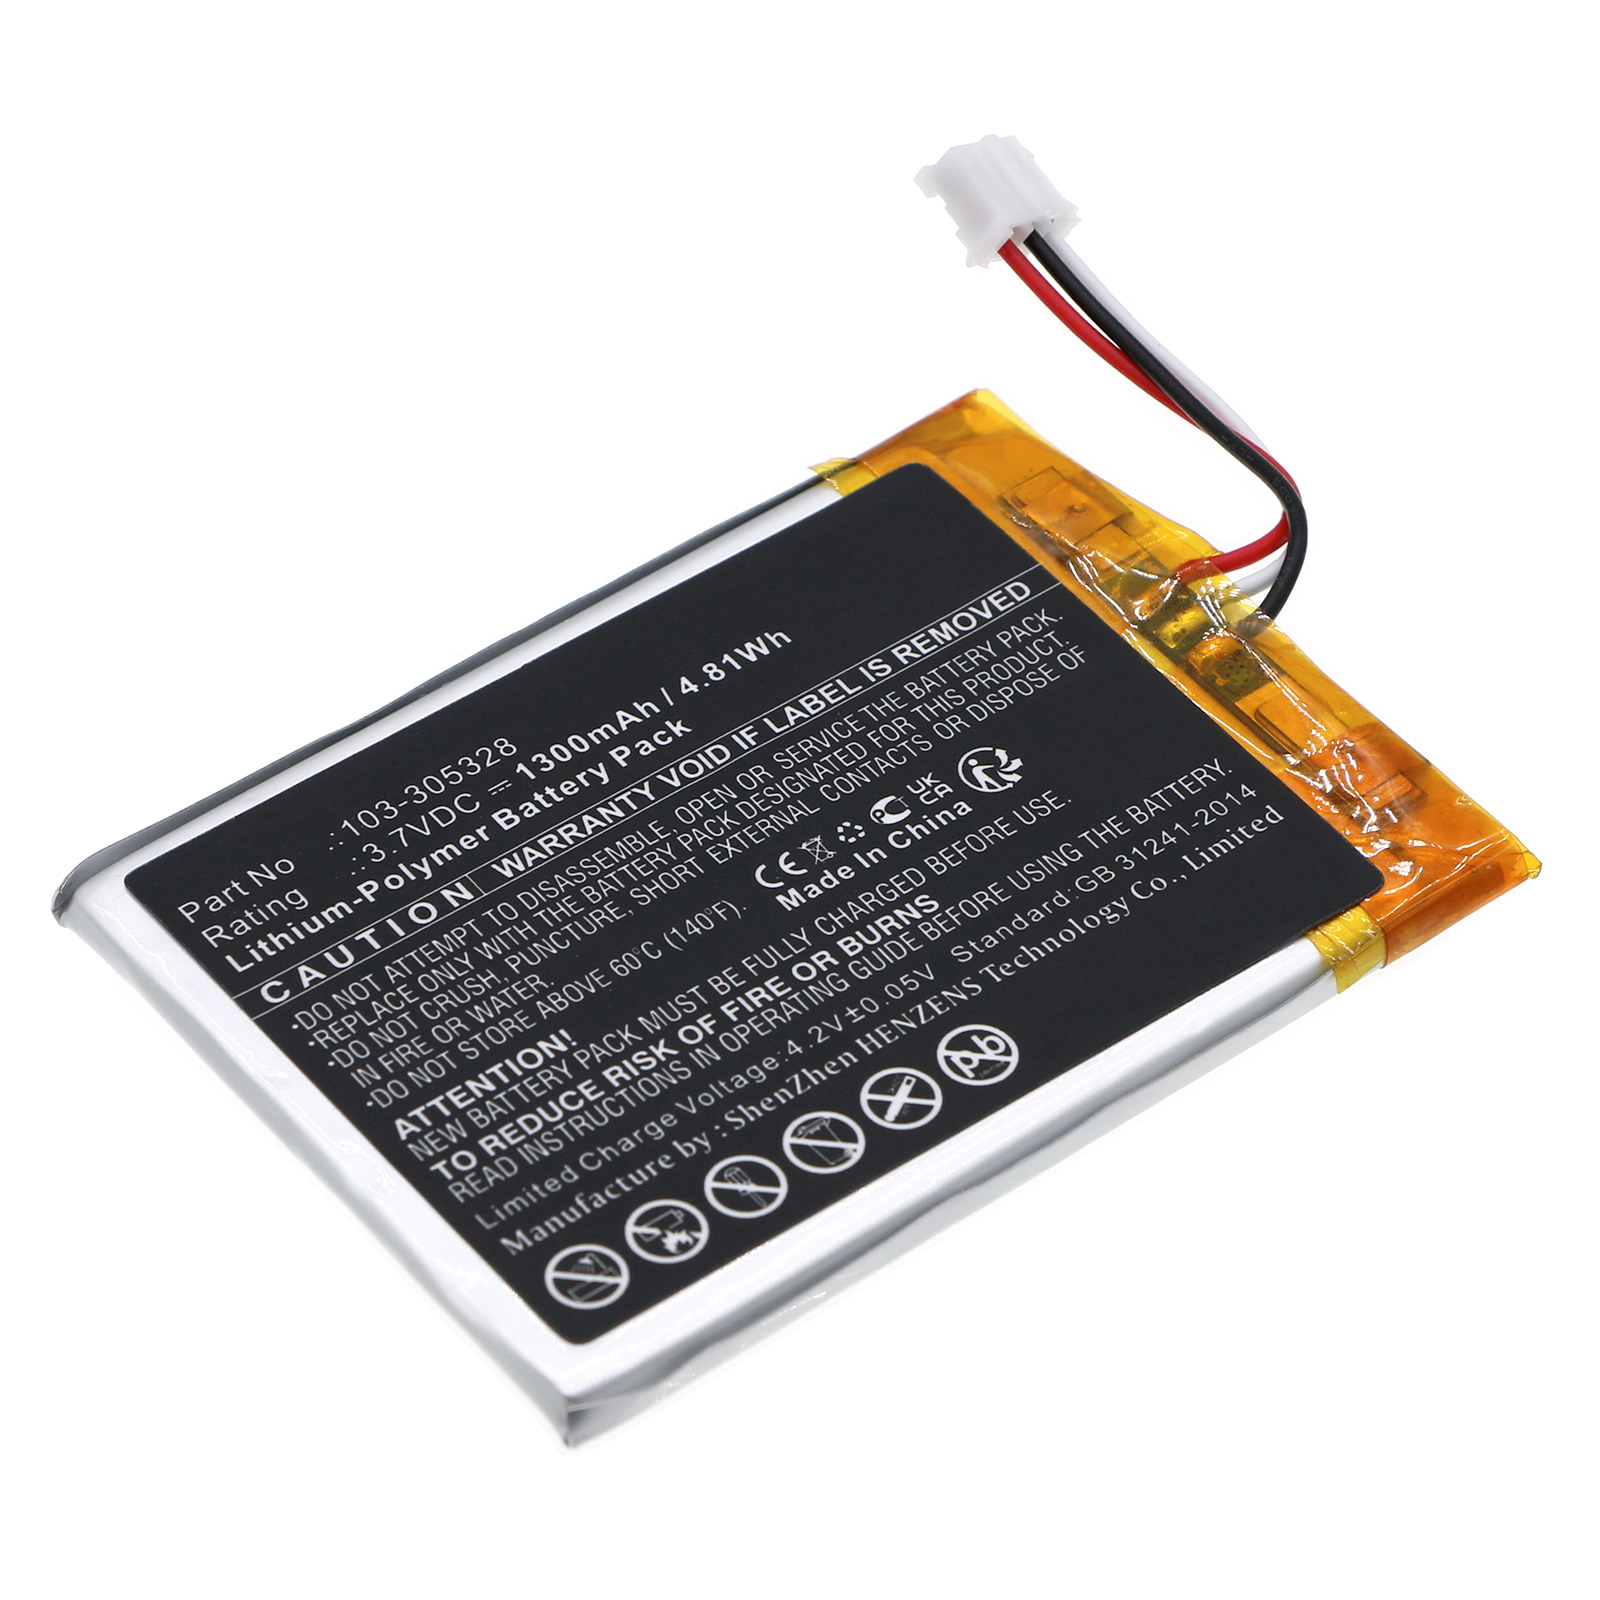 Synergy Digital Dashcam Battery, Compatible with Visonic 103-305328 Dashcam Battery (Li-Pol, 3.7V, 1300mAh)